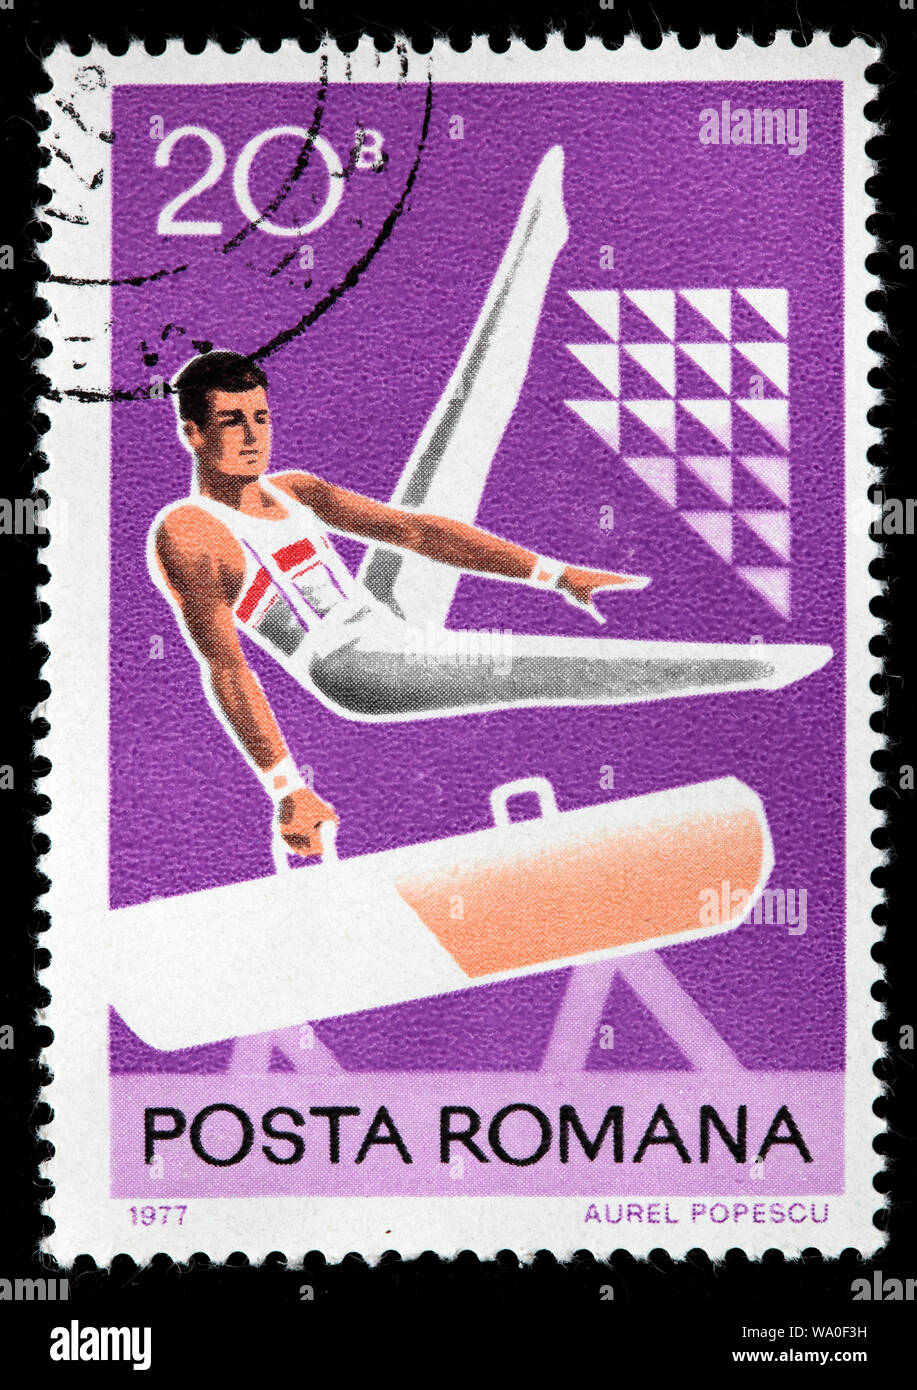 Gymnast on pommel horse, Gymnastics, postage stamp, Romania, 1977 Stock Photo